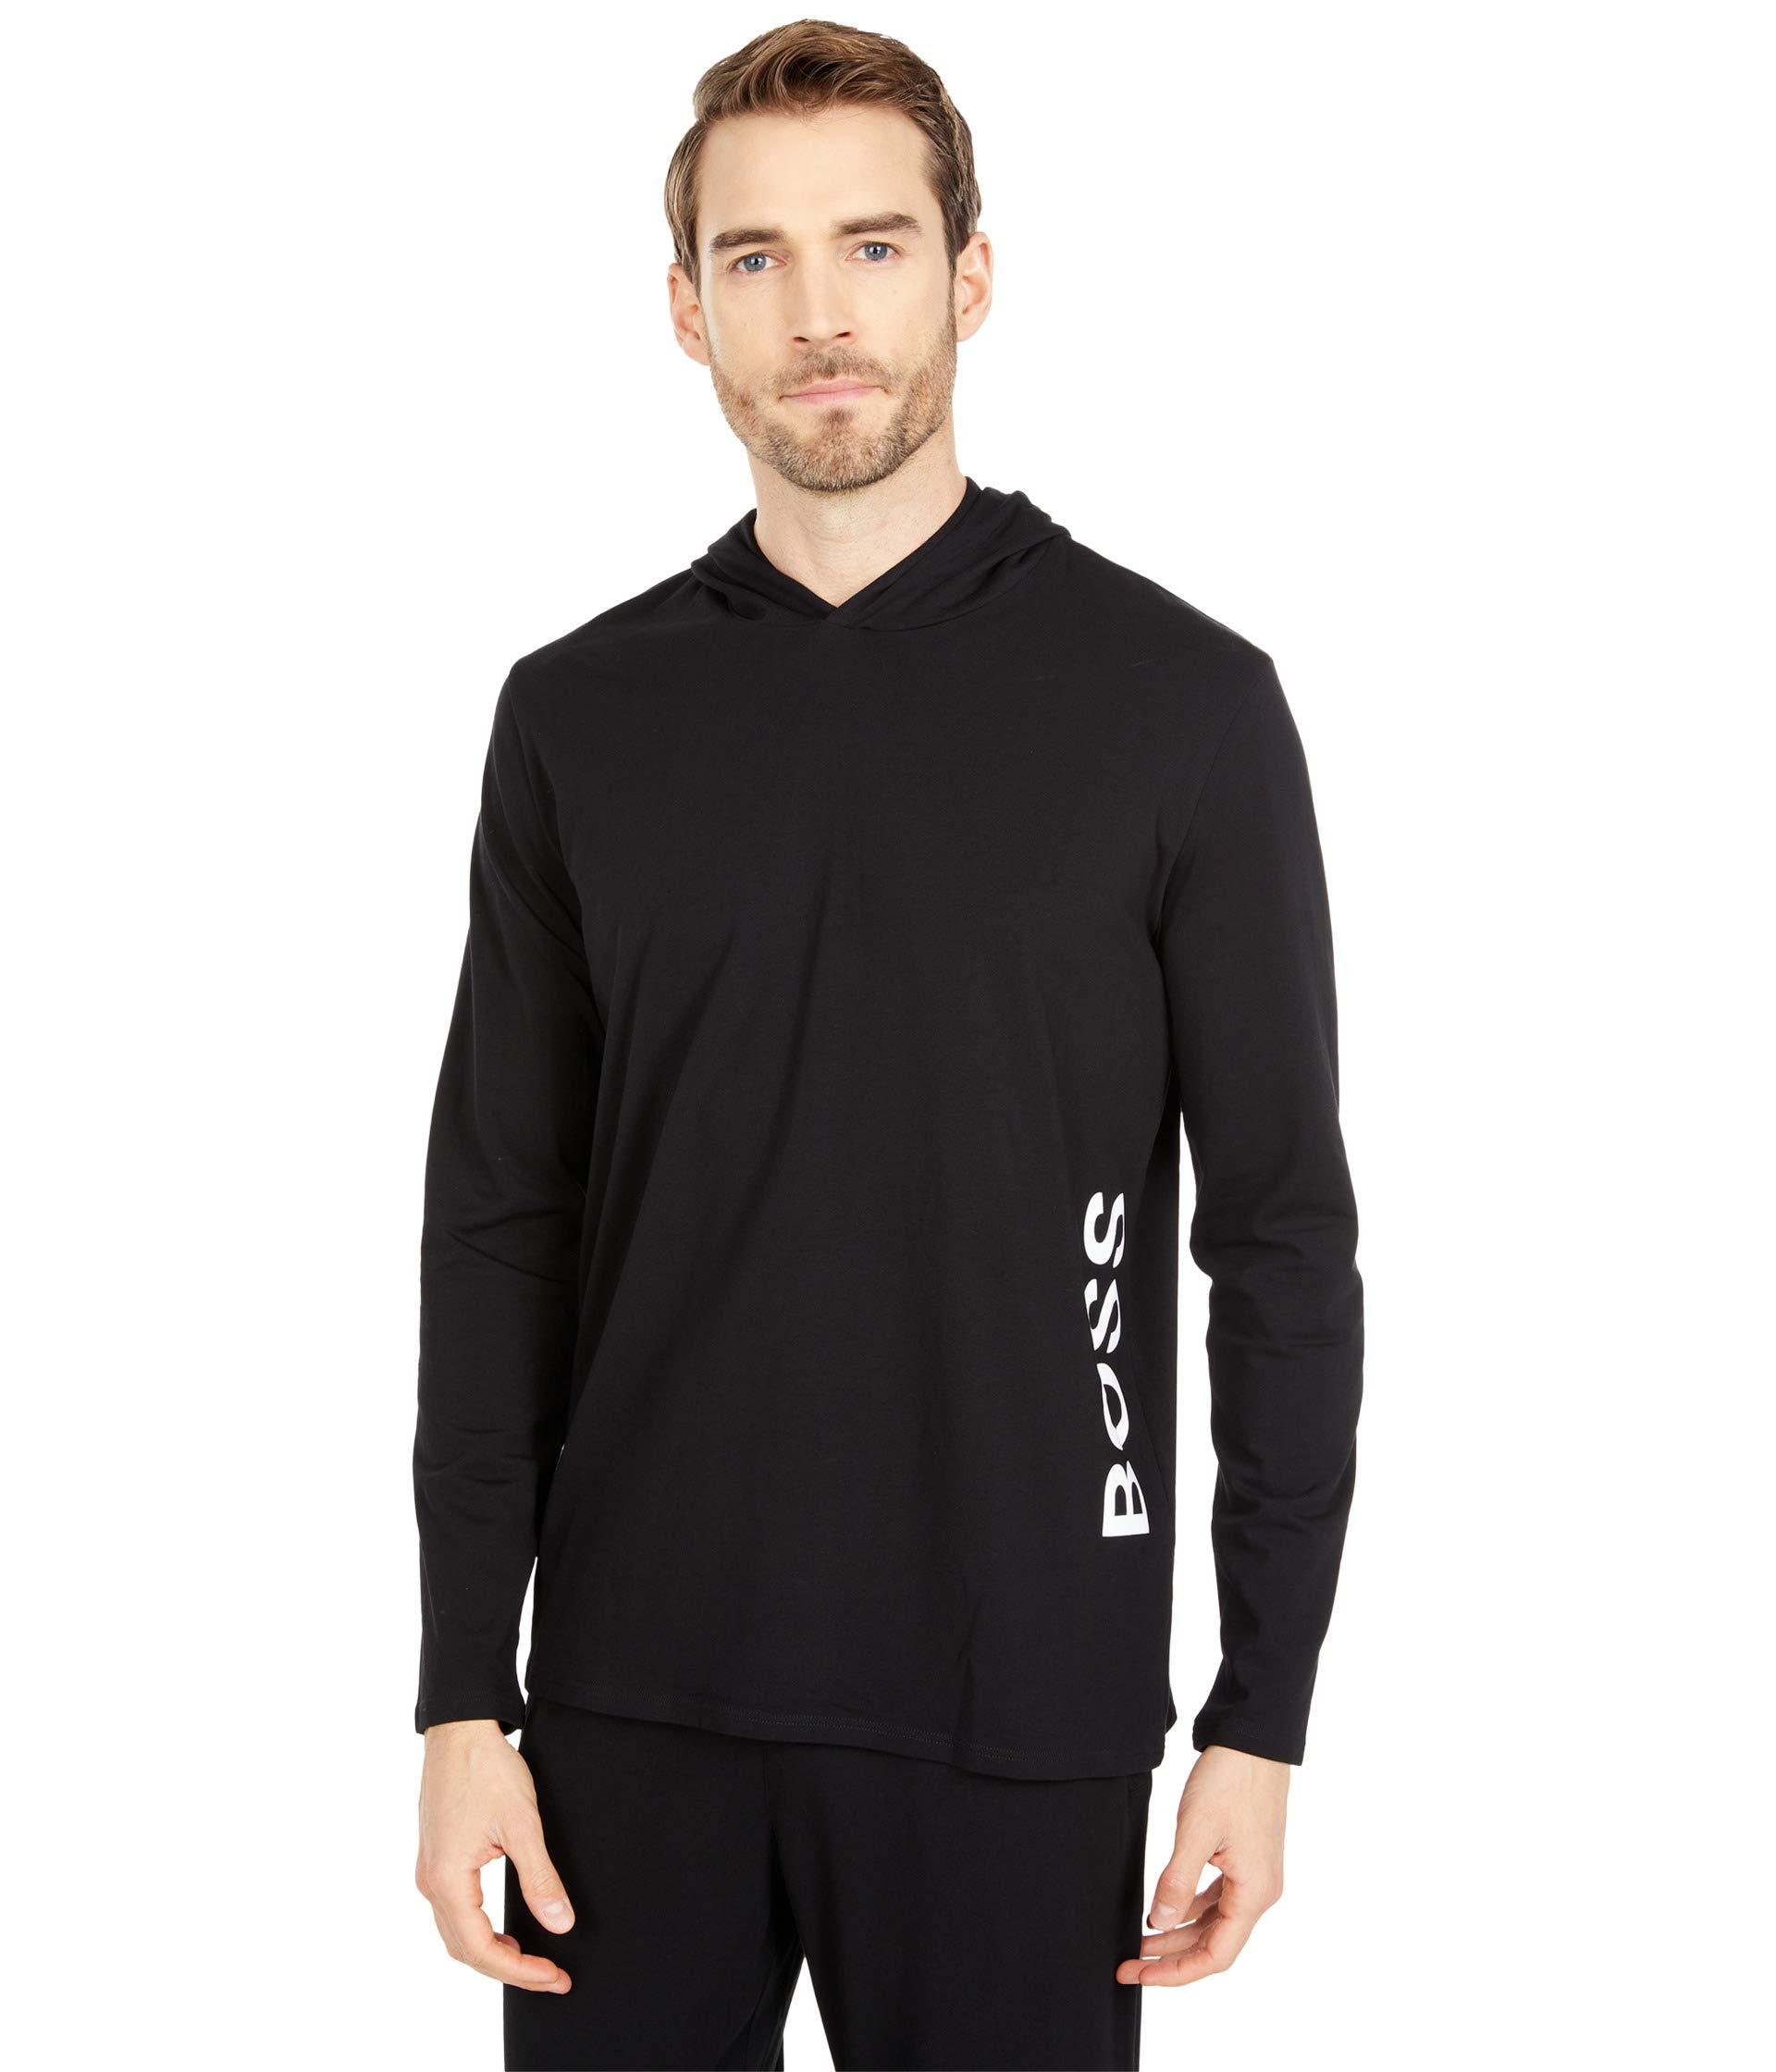 Hugo Boss Long Sleeve Hooded T Shirt Flash Sales, SAVE 51%.